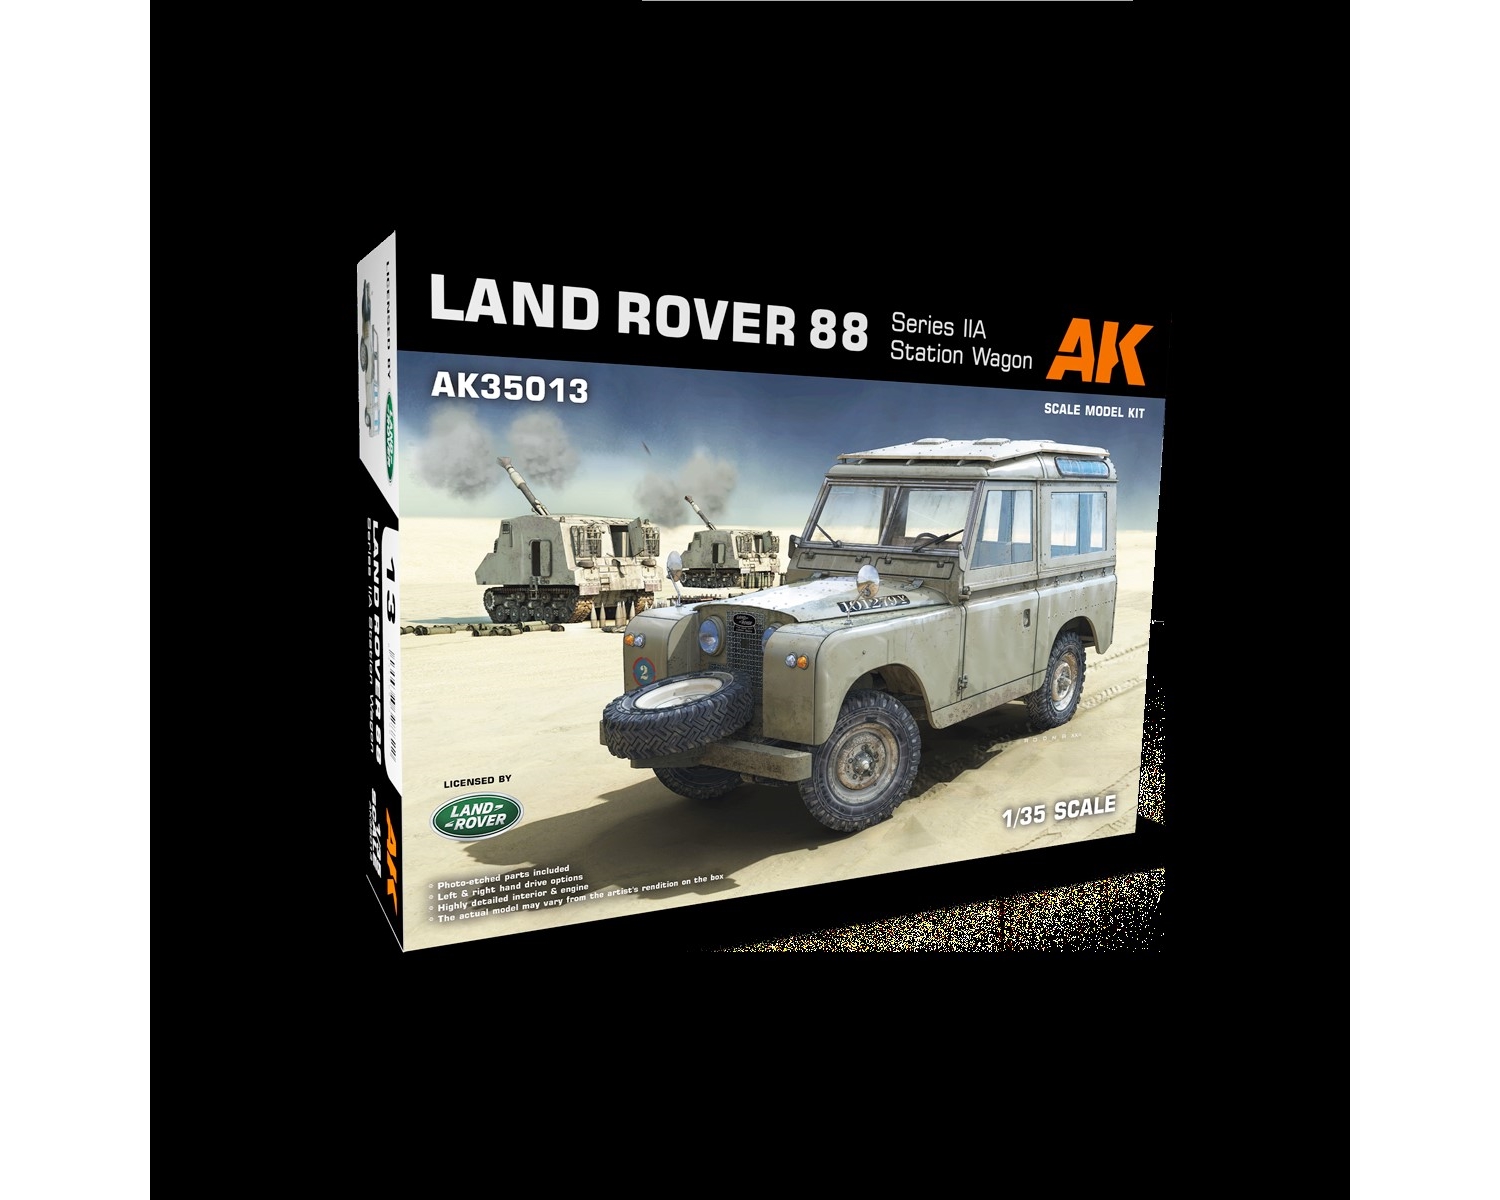 AK35013 - LAND ROVER 88 SERIES IIA STATION WAGON